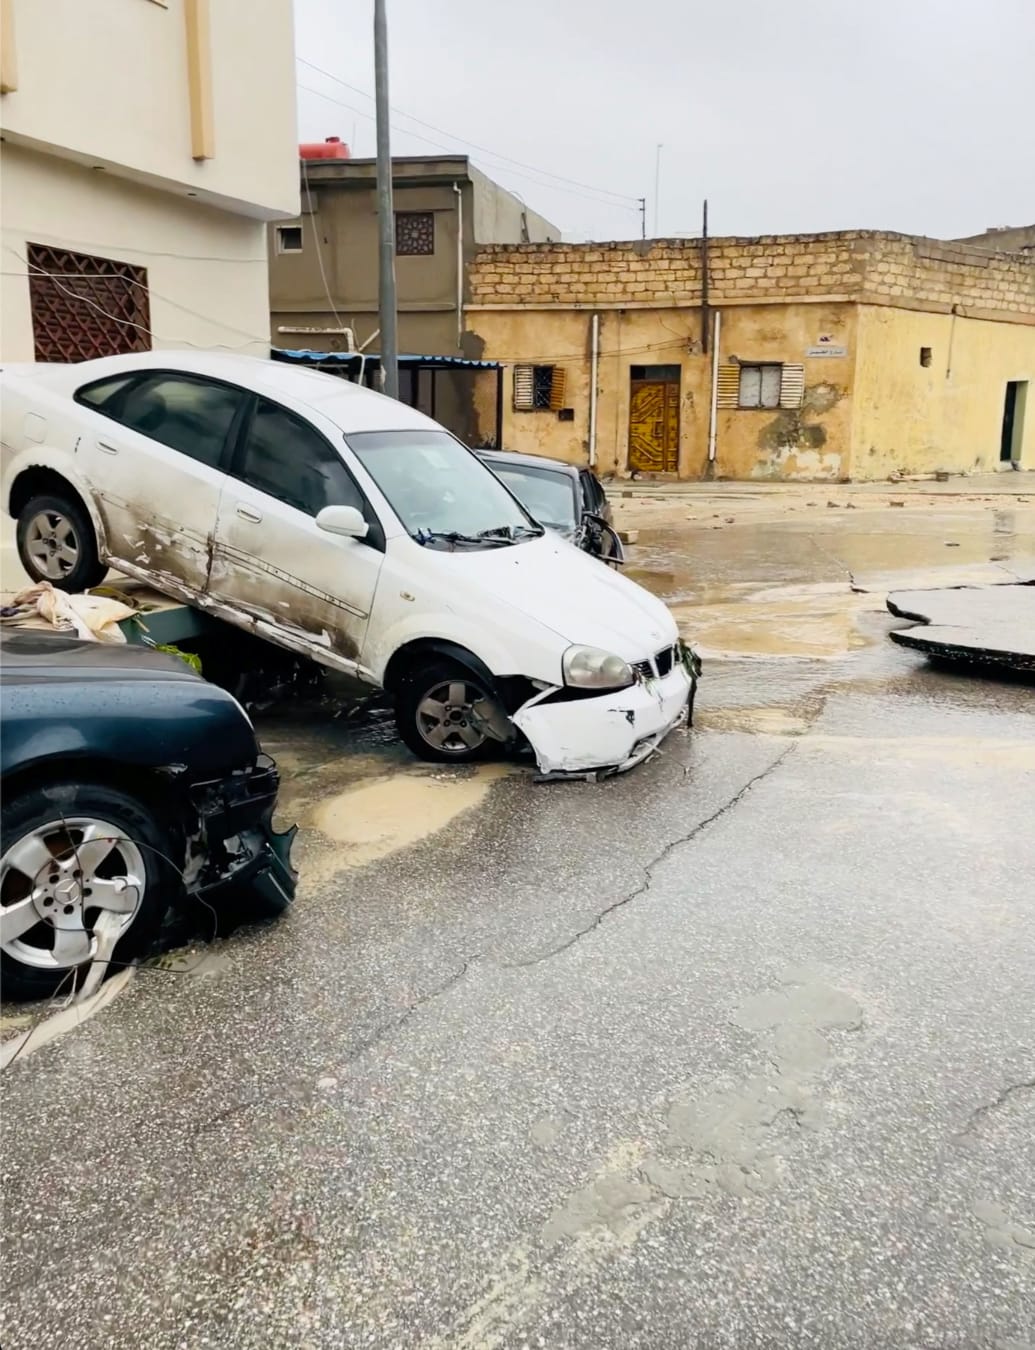 Photo showing floods in Bayda, Libya